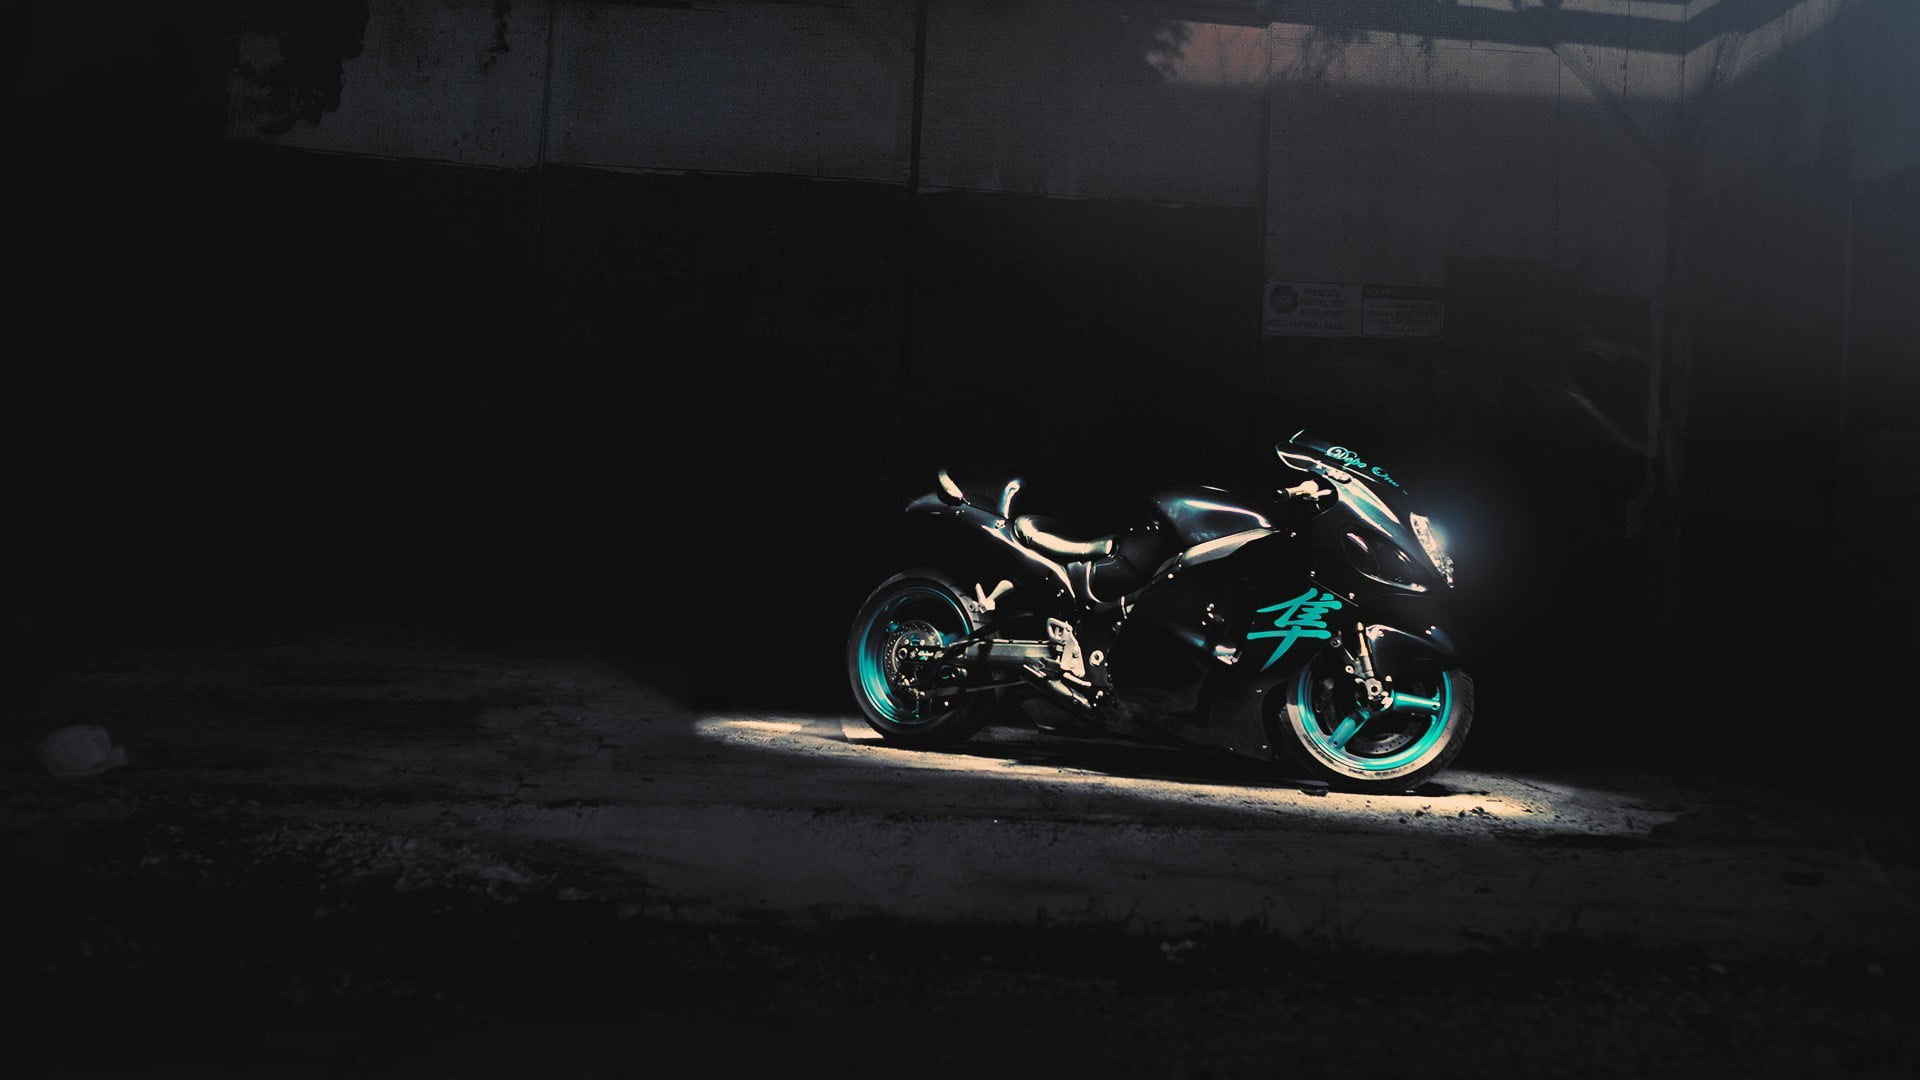 Blue and black sports bike photography wallpaper, Suzuki, Hayabusa, superbike